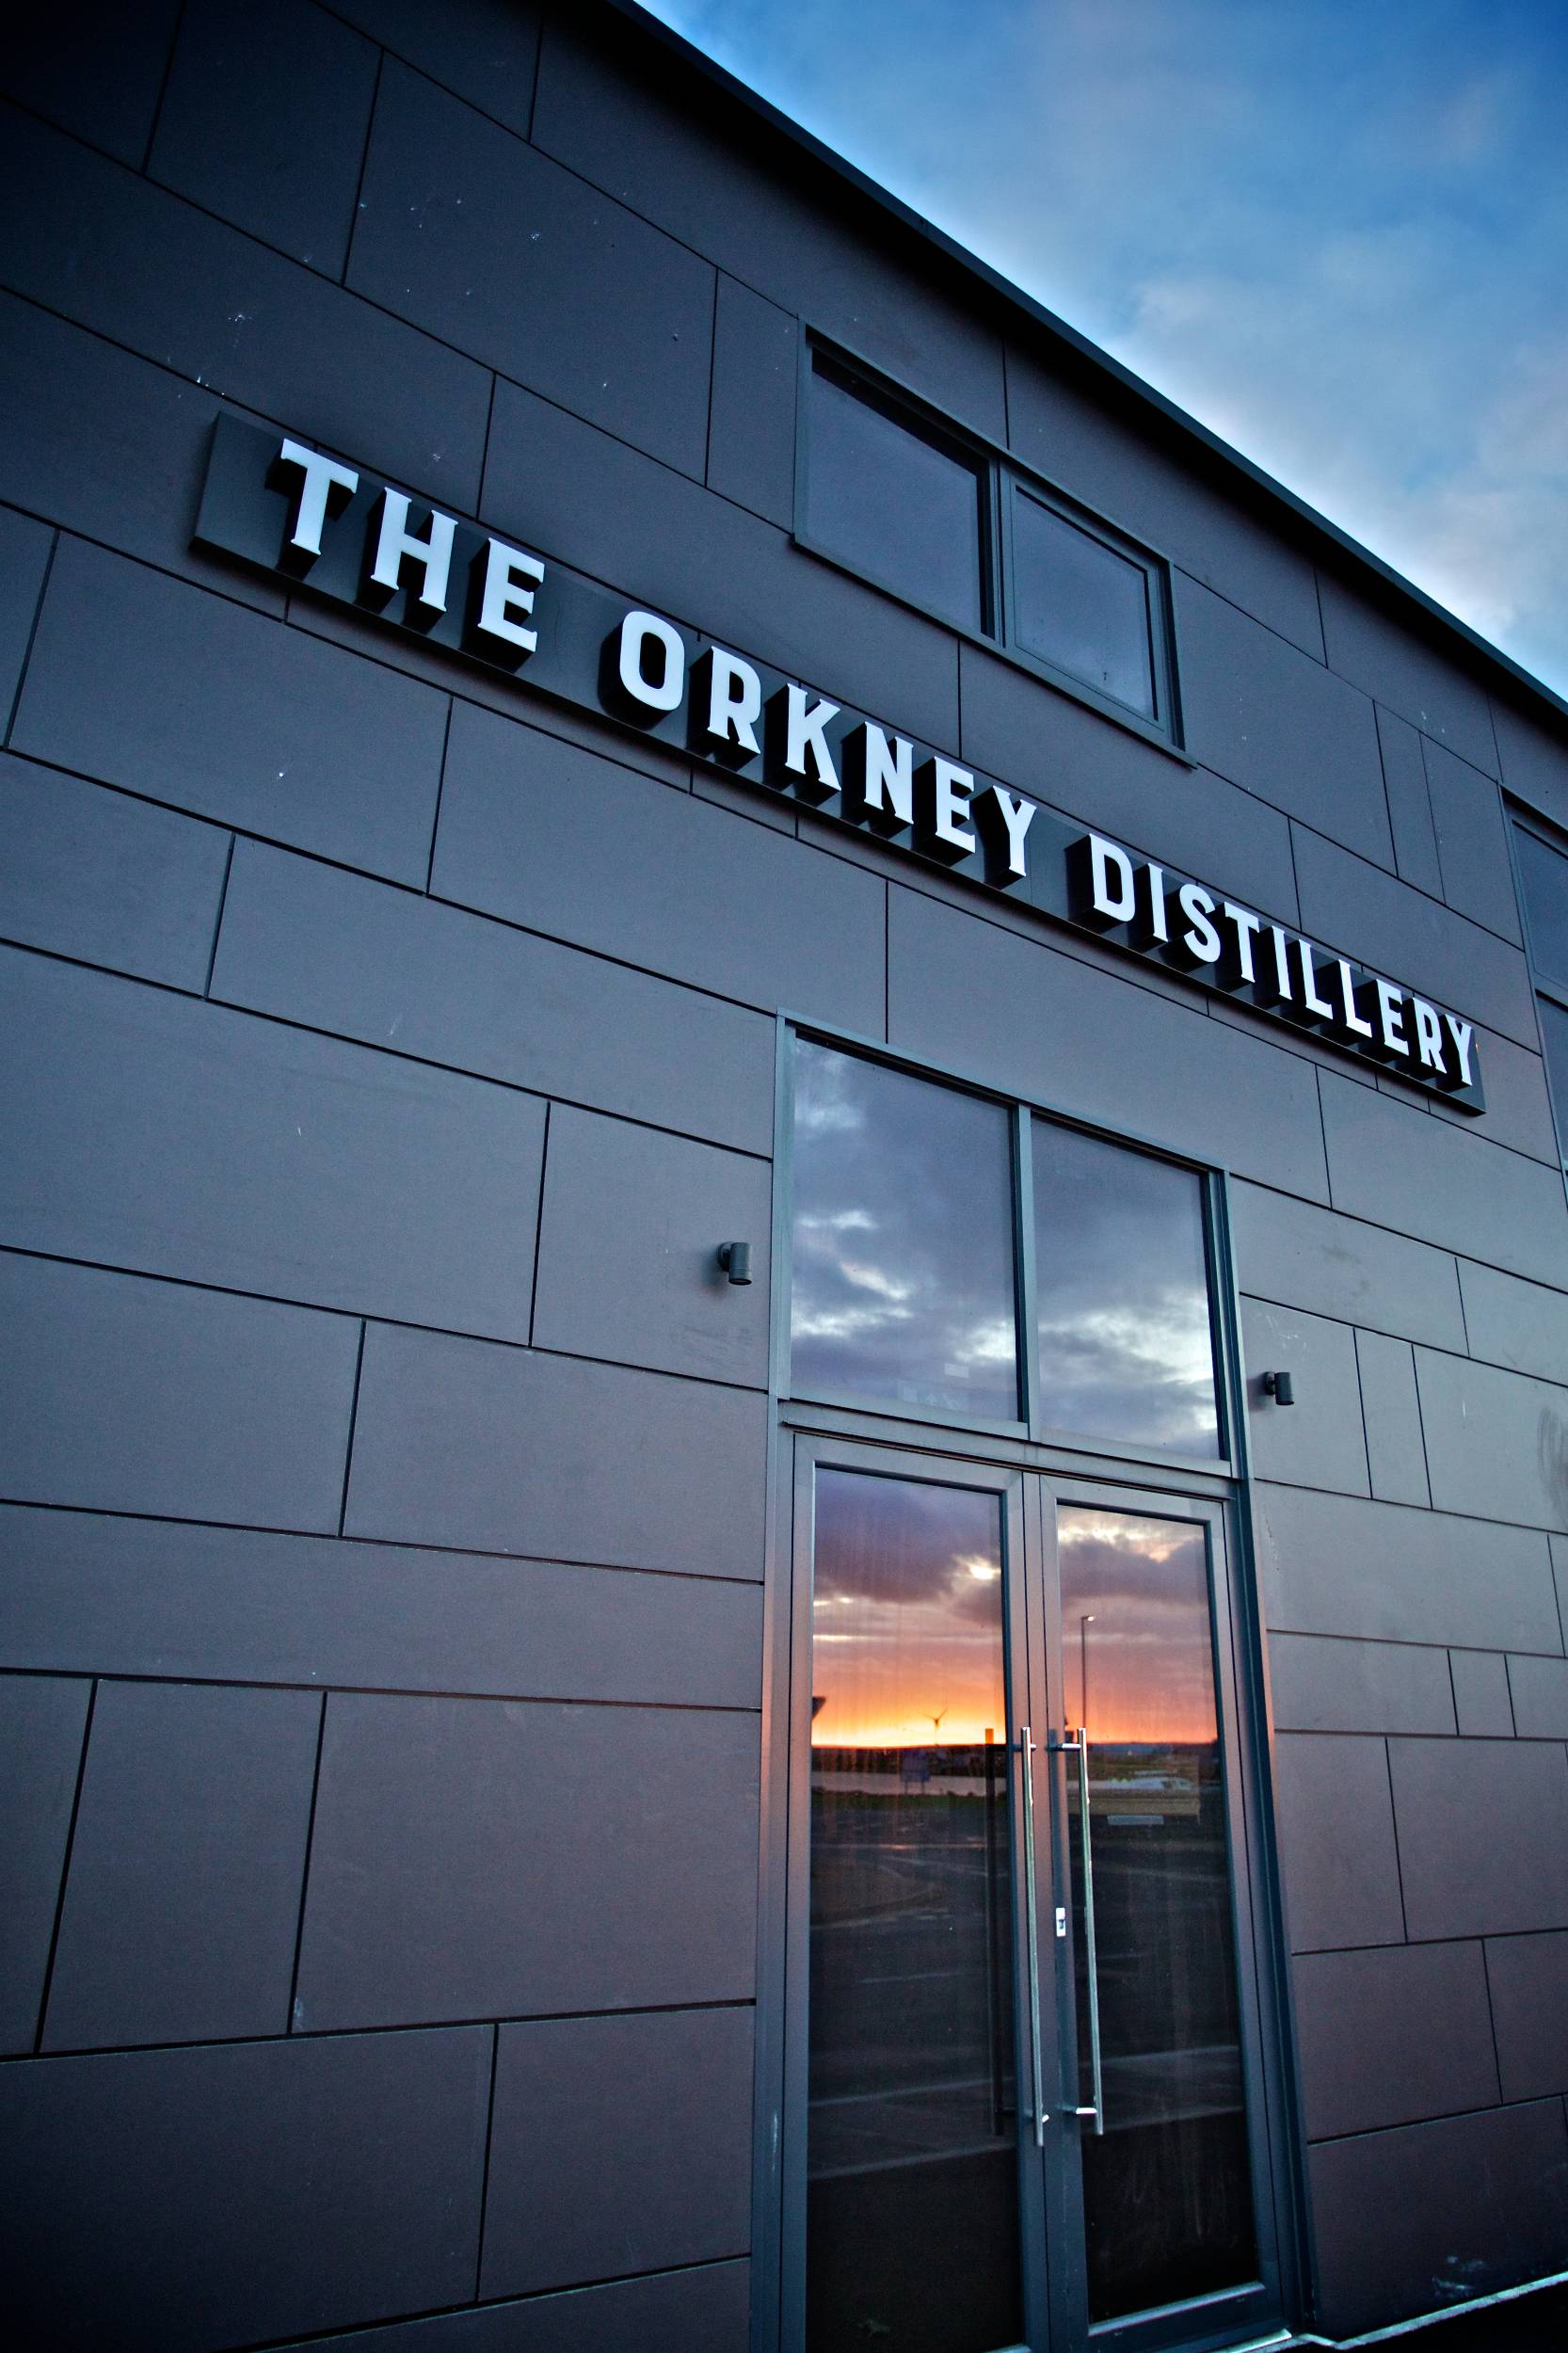 The Orkney Distillery building in Kirkwall